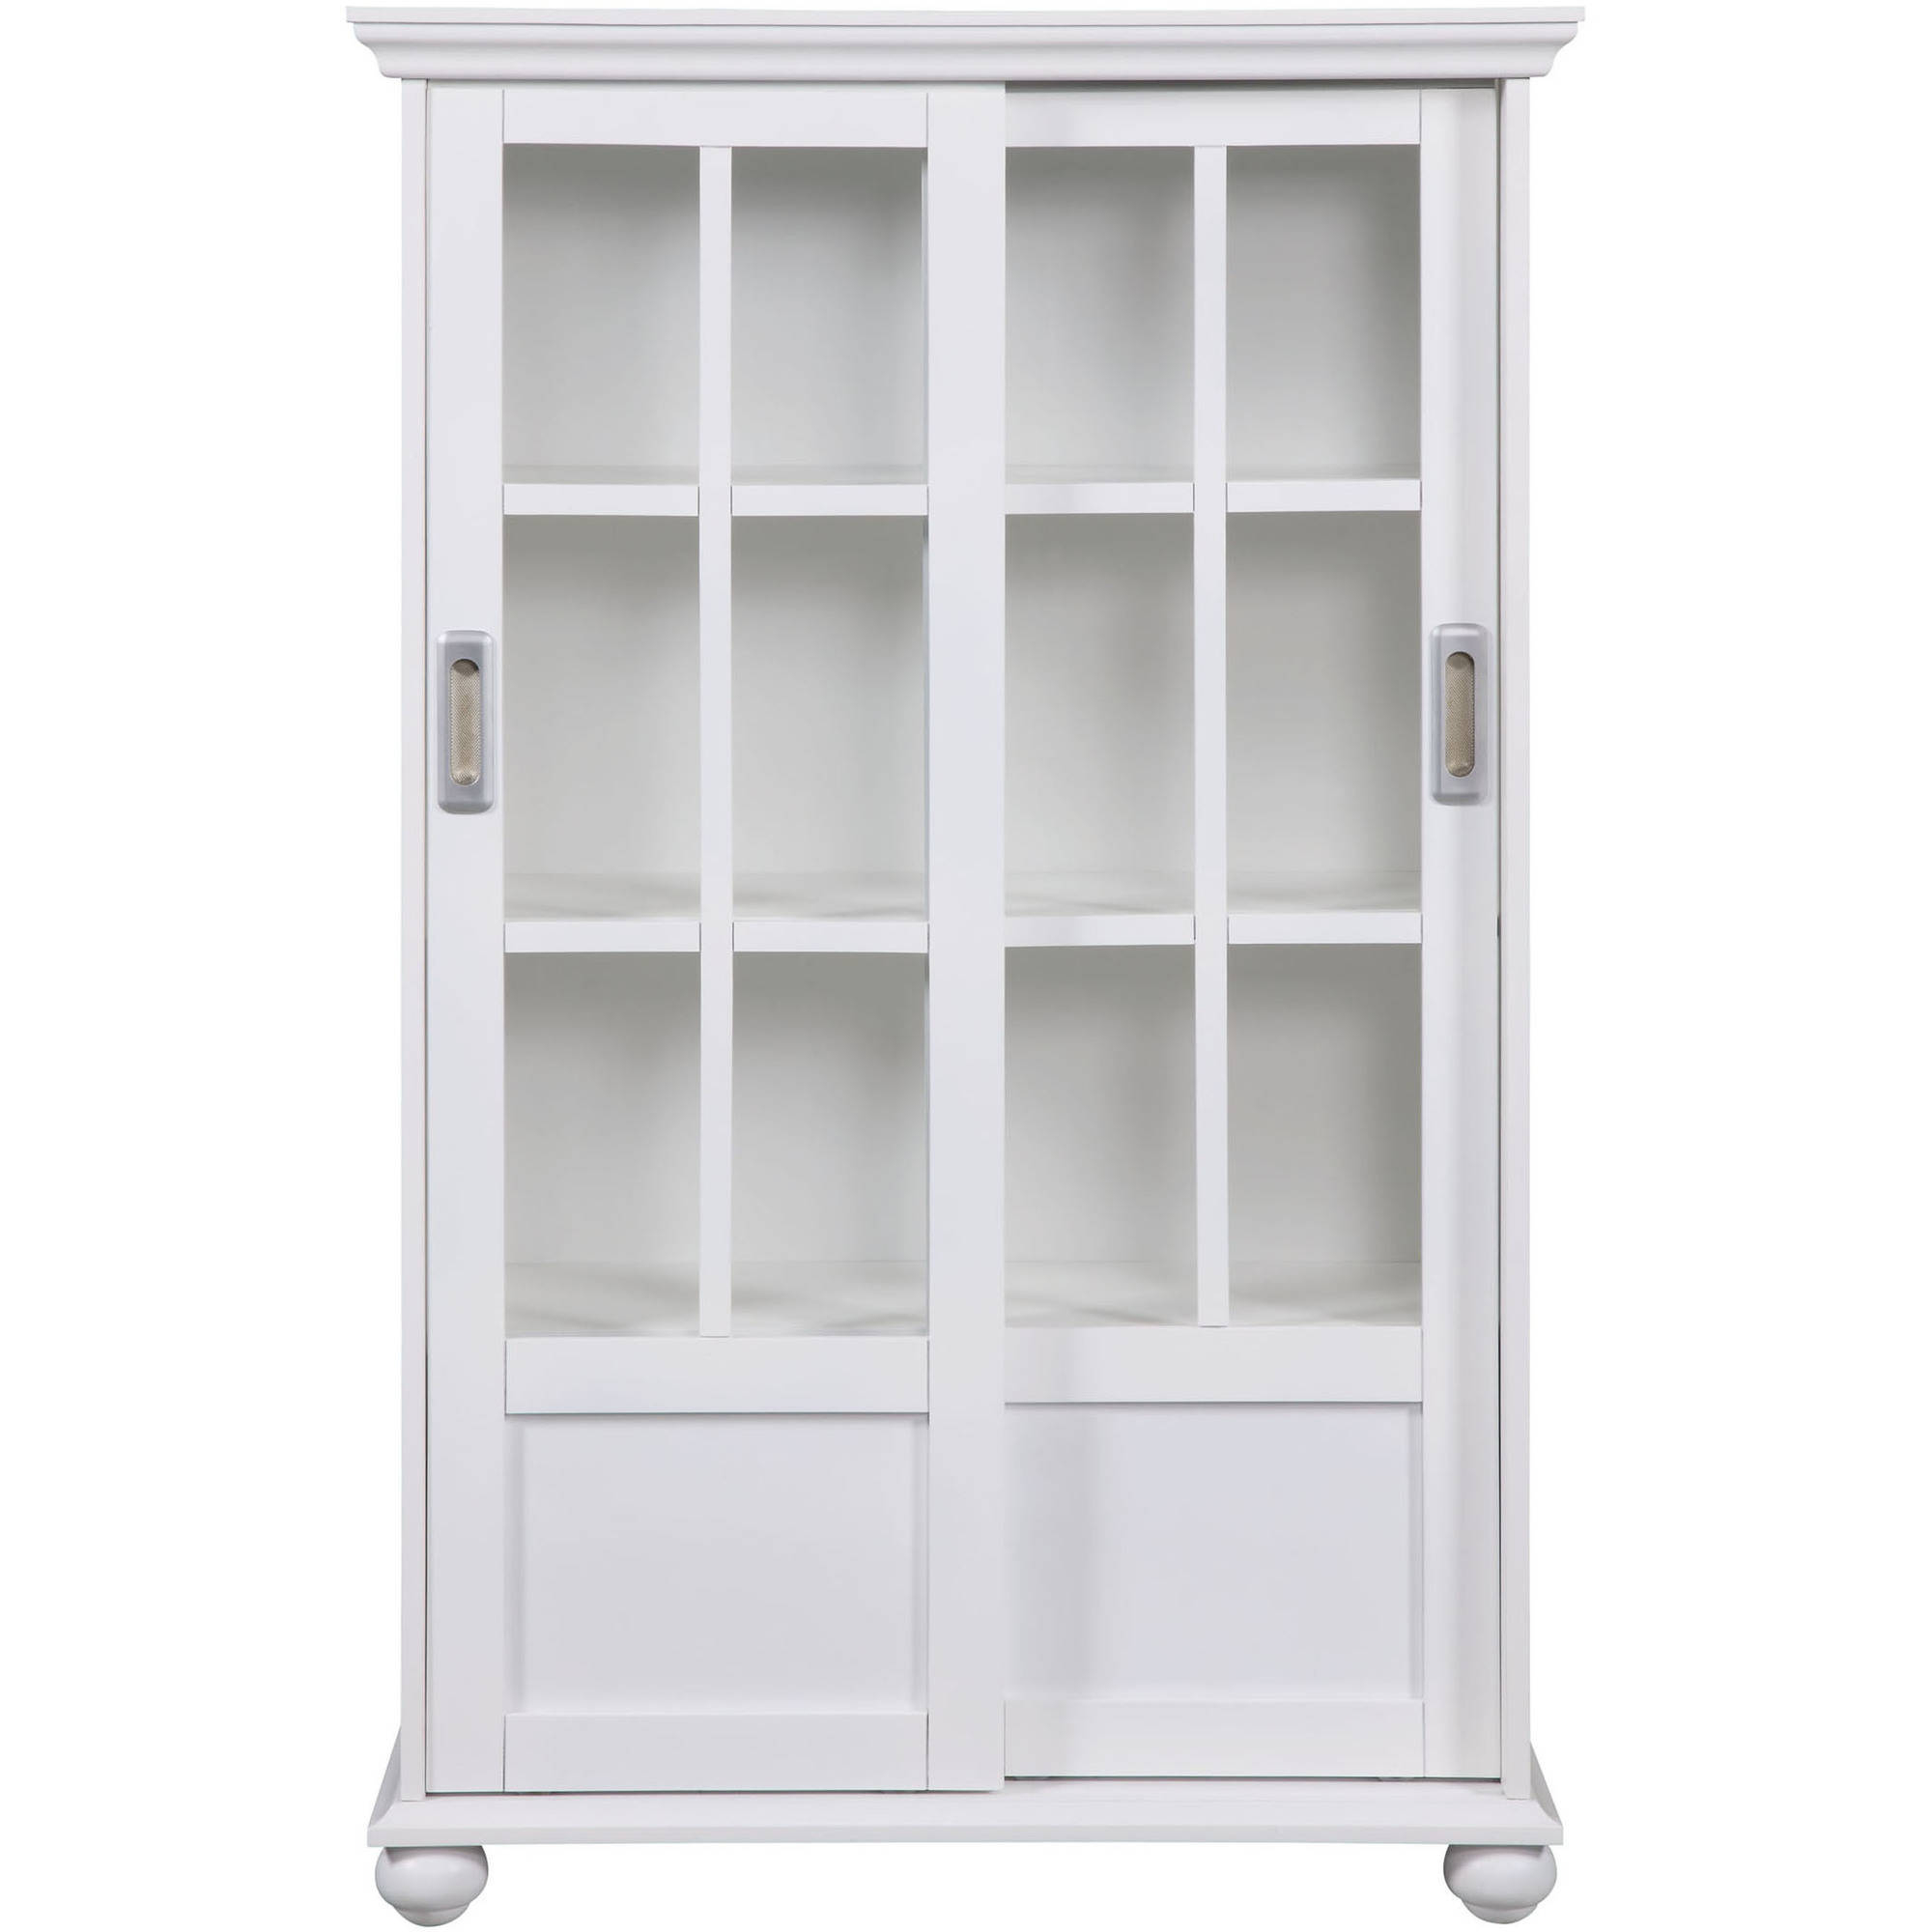 Bookcase With Glass Doors Visualhunt, Wayfair Bookcases With Glass Doors